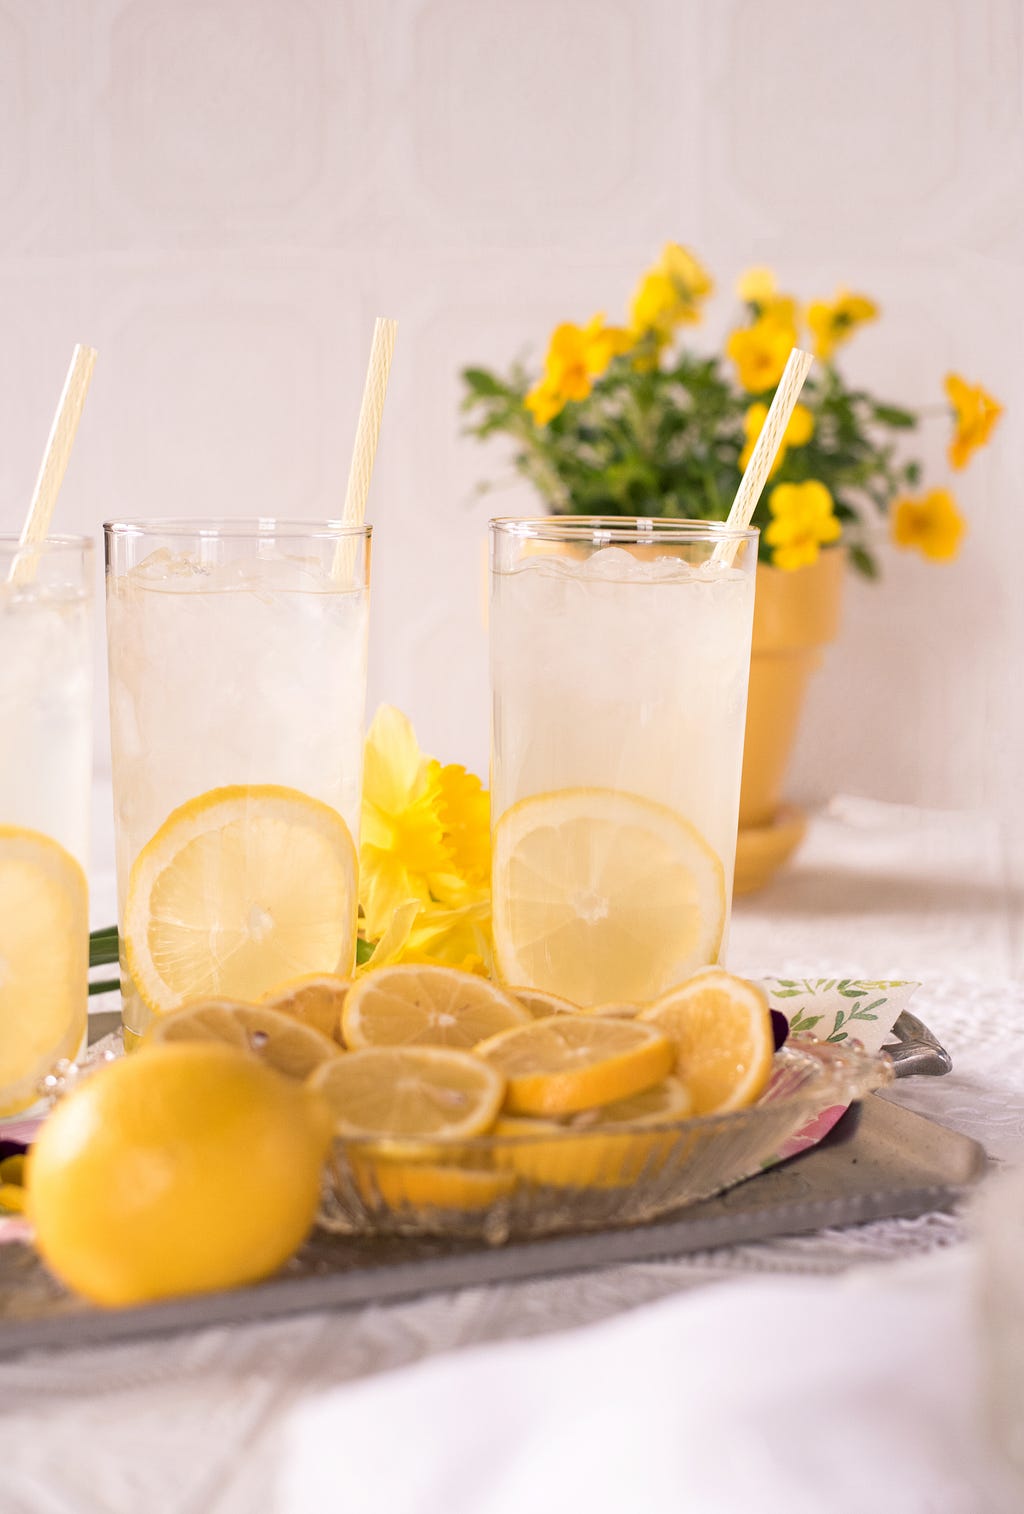 A tray of lemons and glasses of lemonade